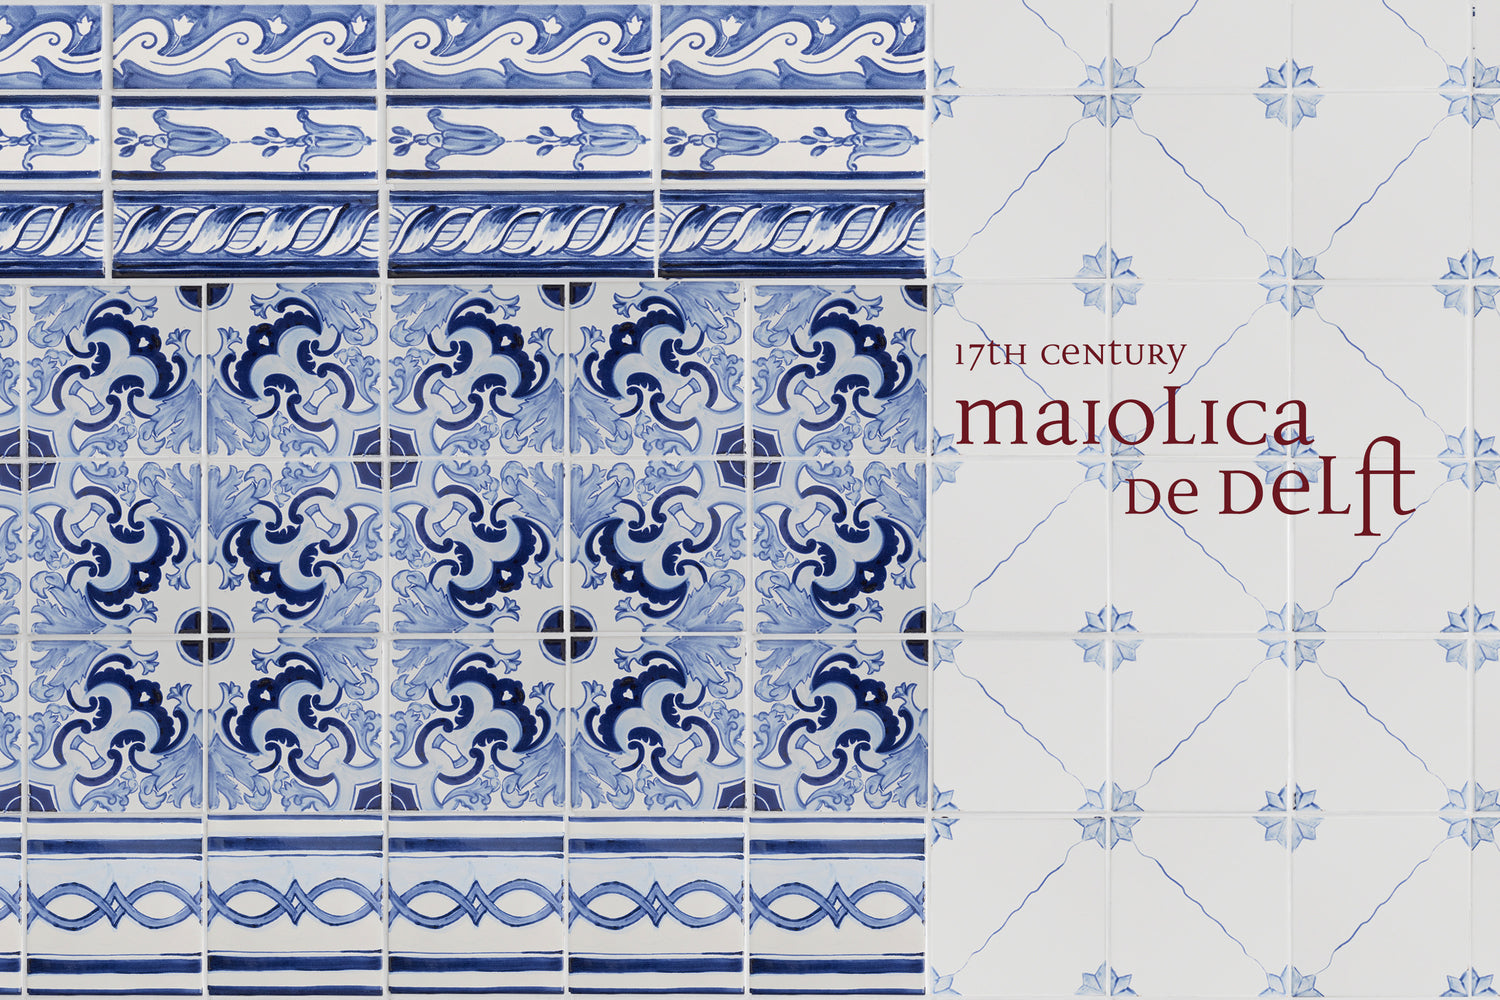 17th century: maiolica de delft